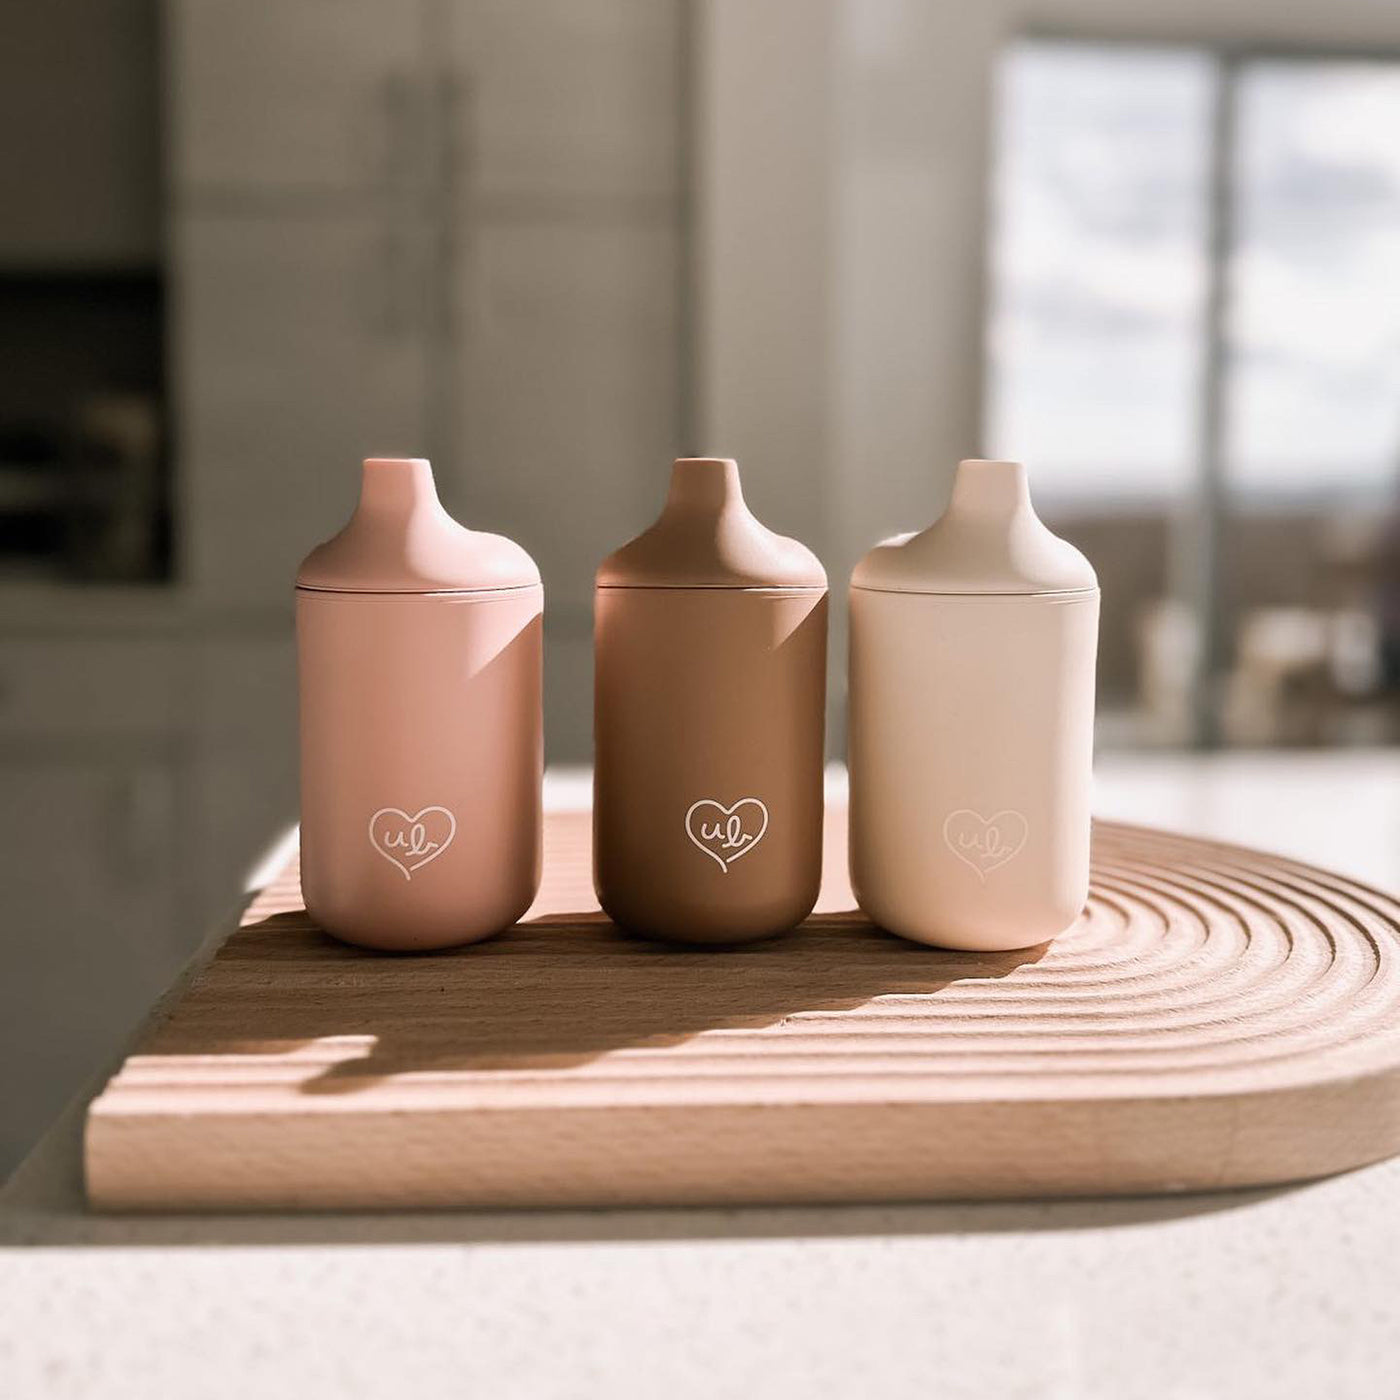 Ceramic Sippy Cup — The Pot Shop